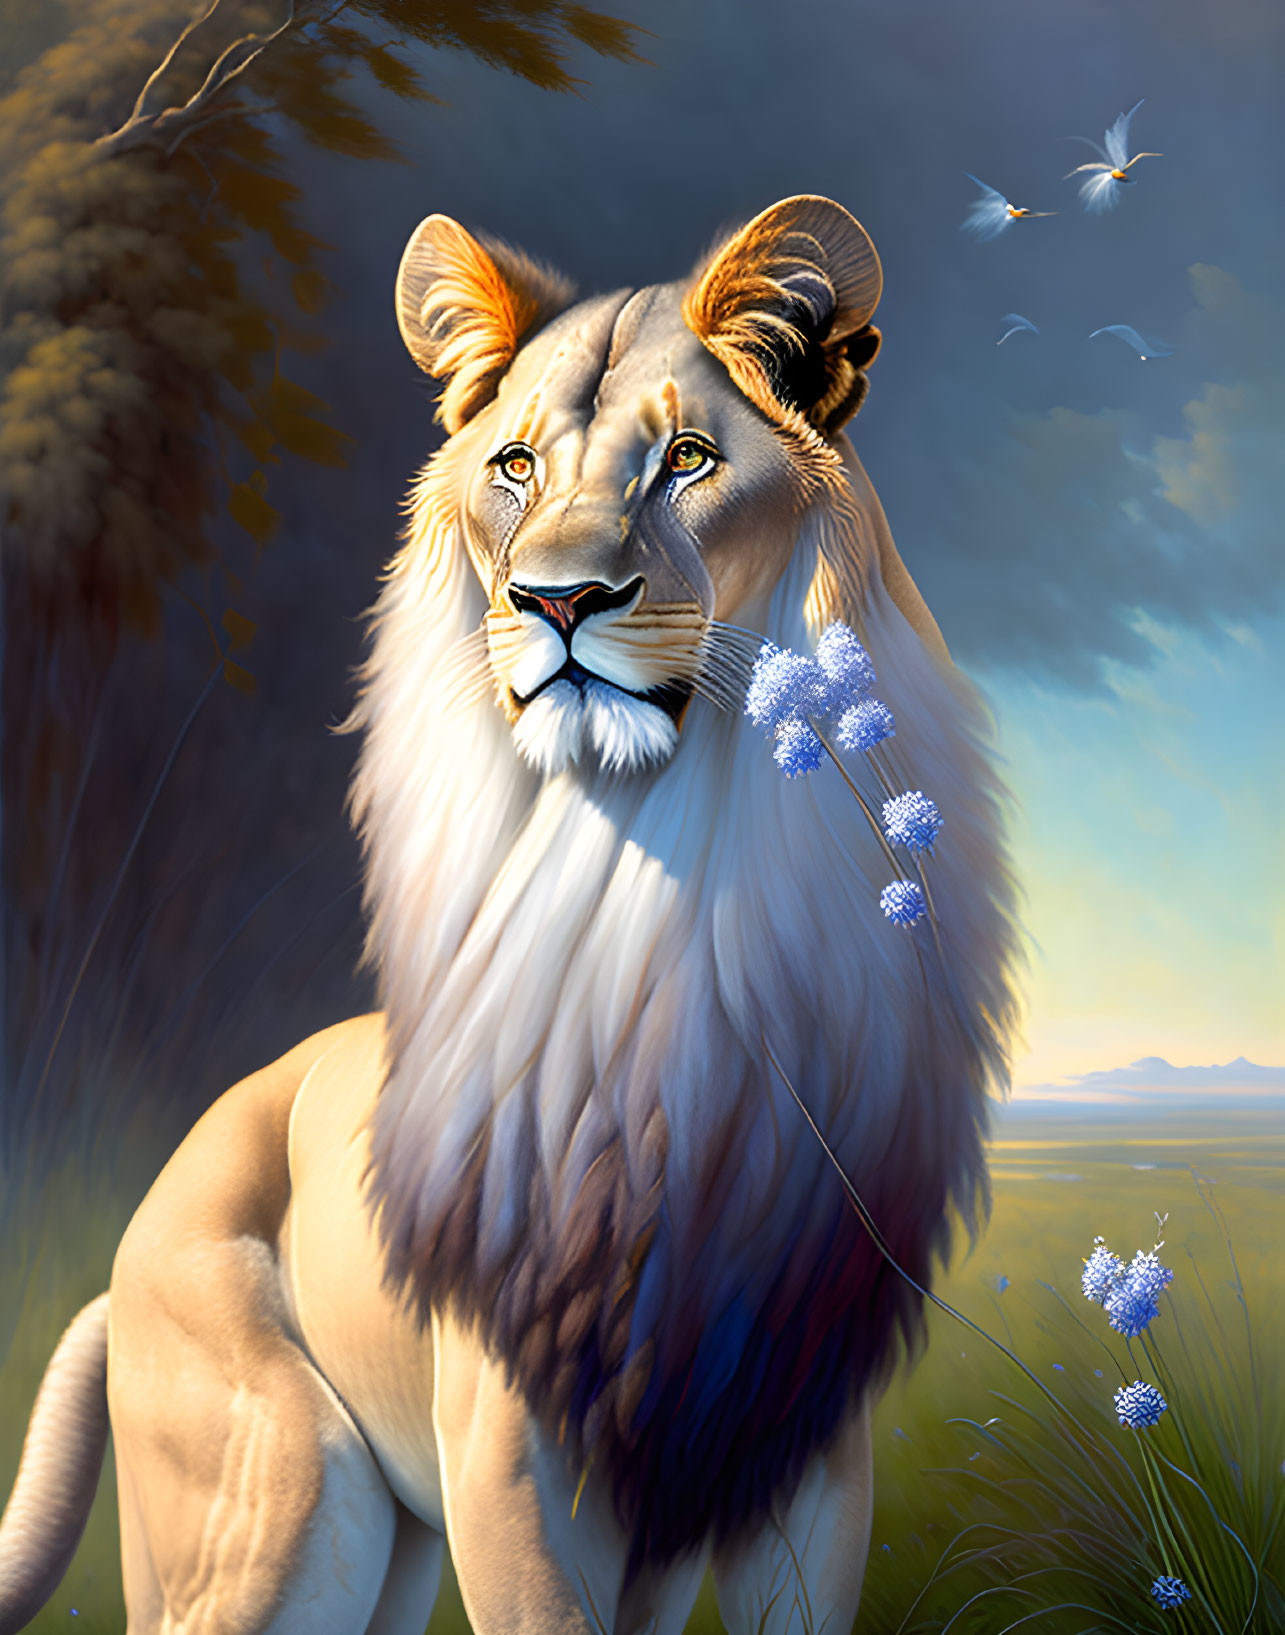 A graceful lioness